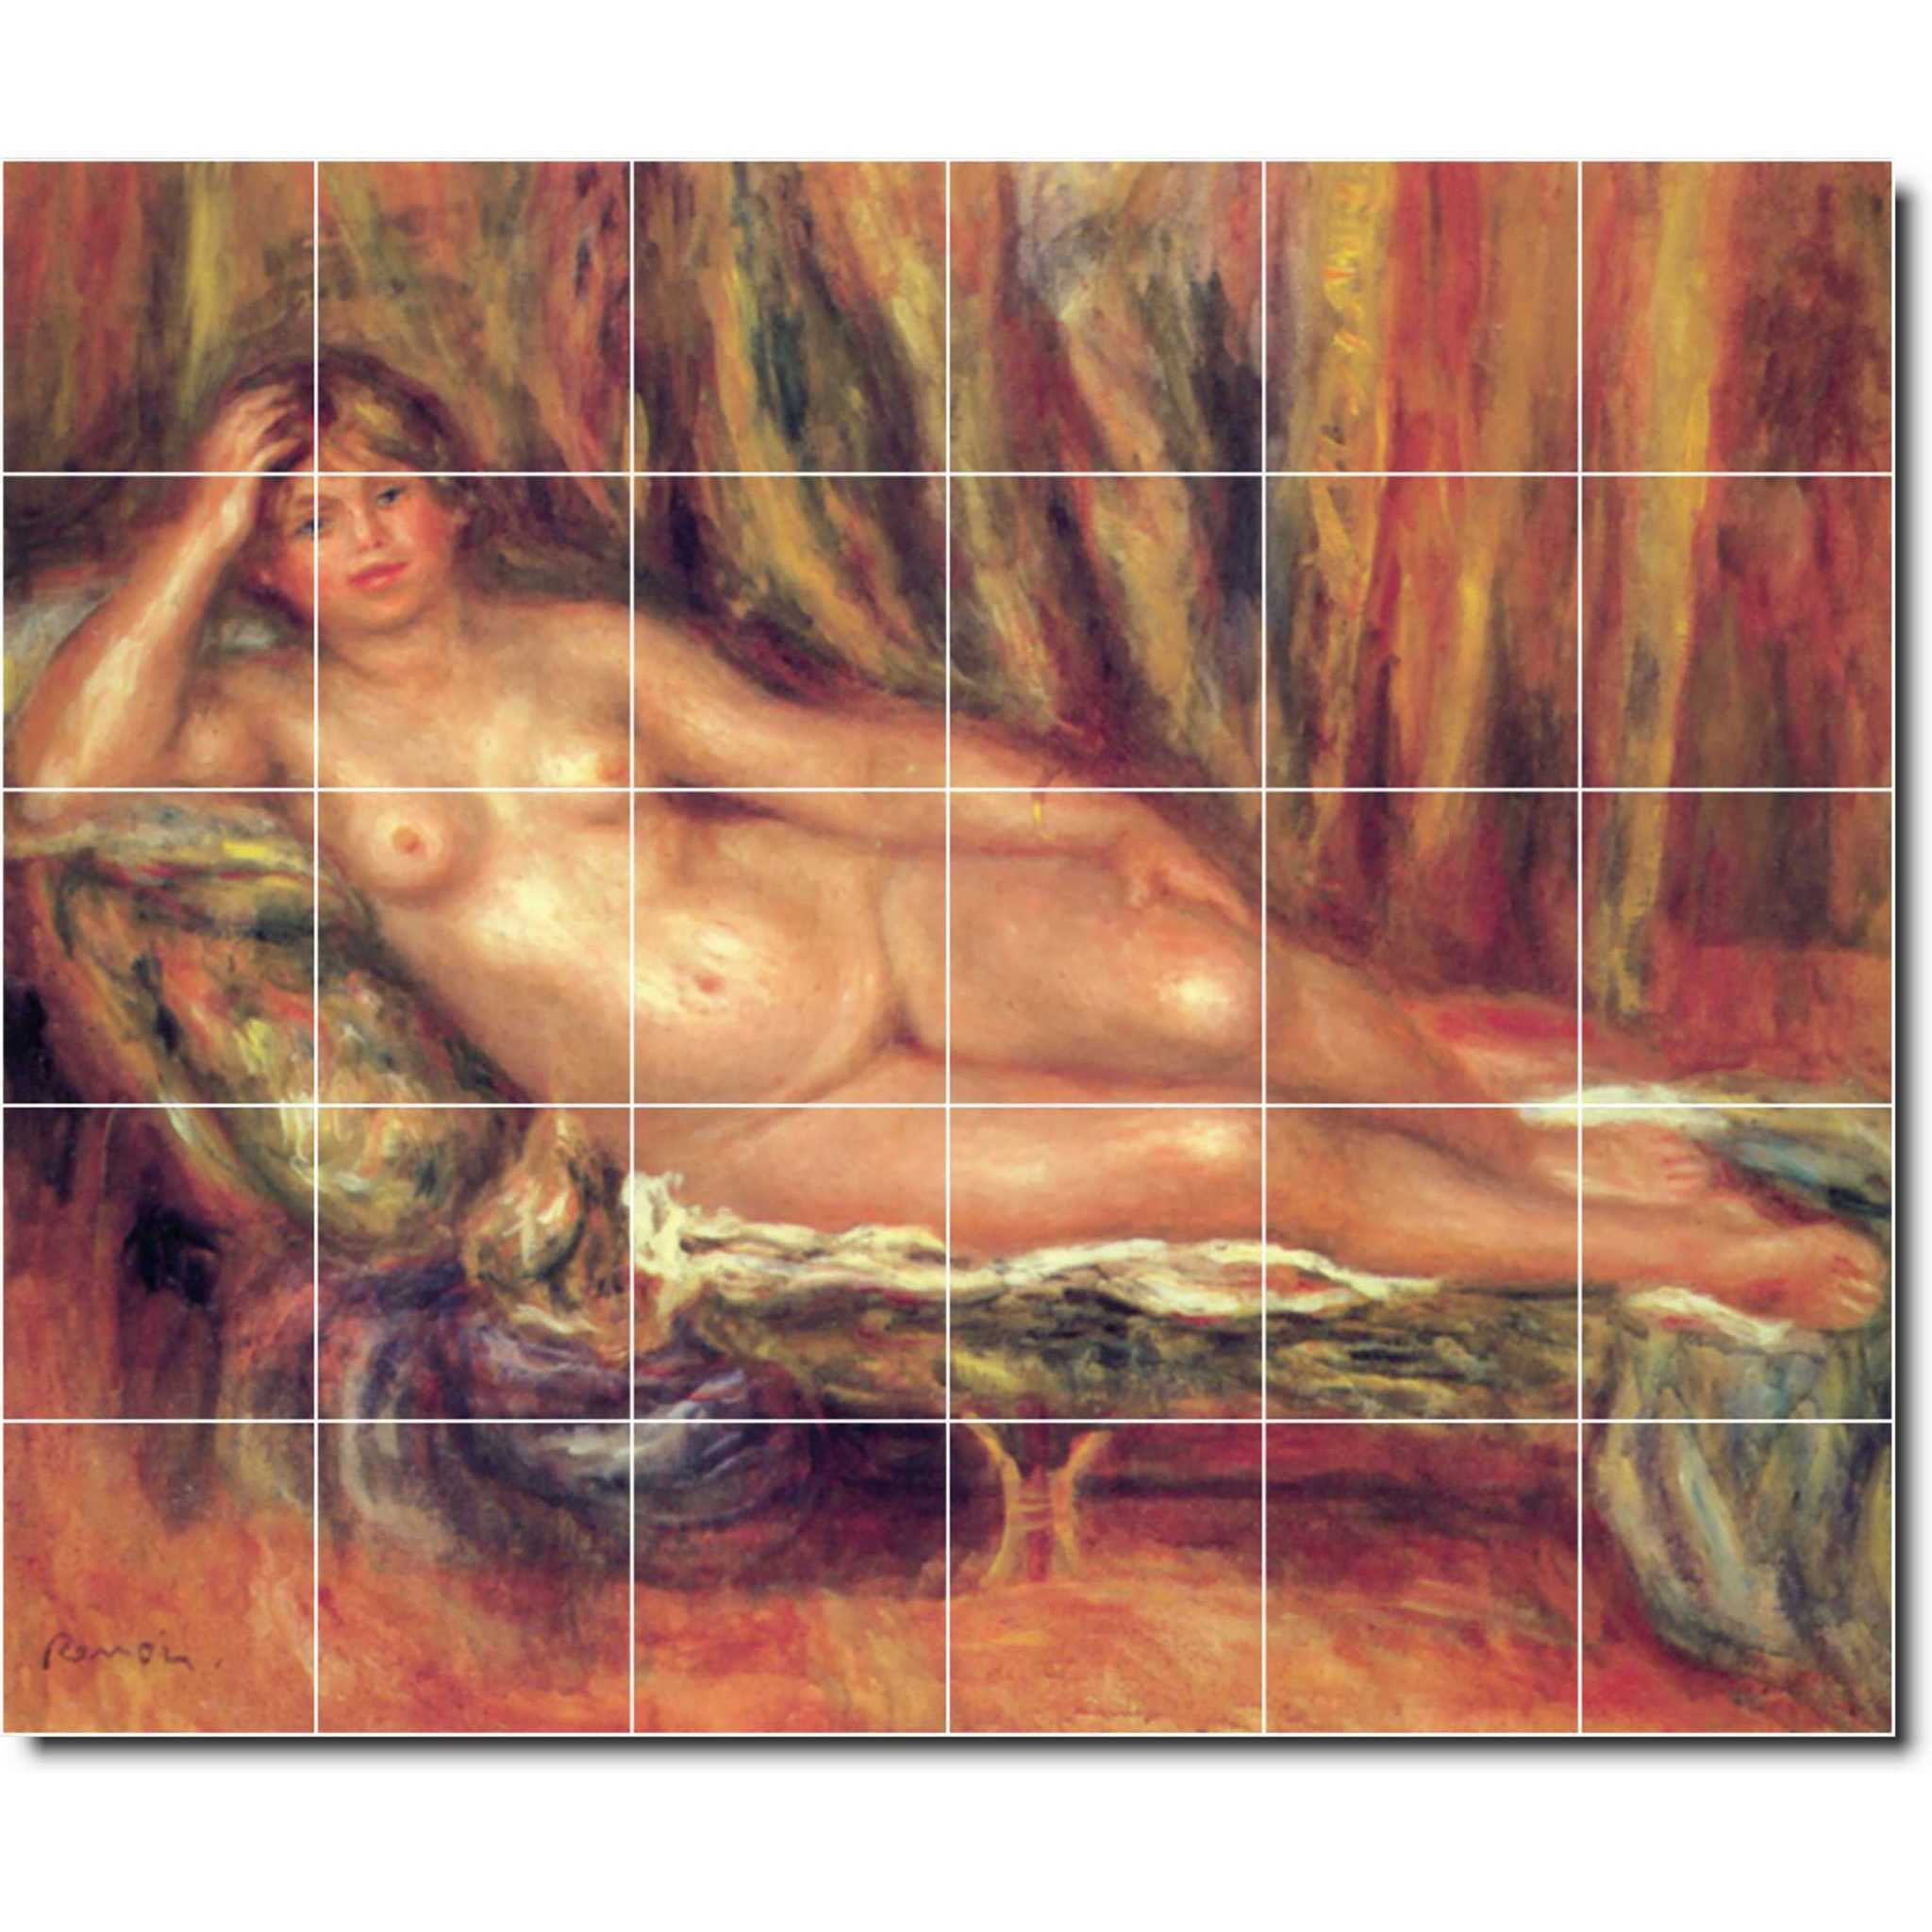 auguste renoir nude painting ceramic tile mural p07400